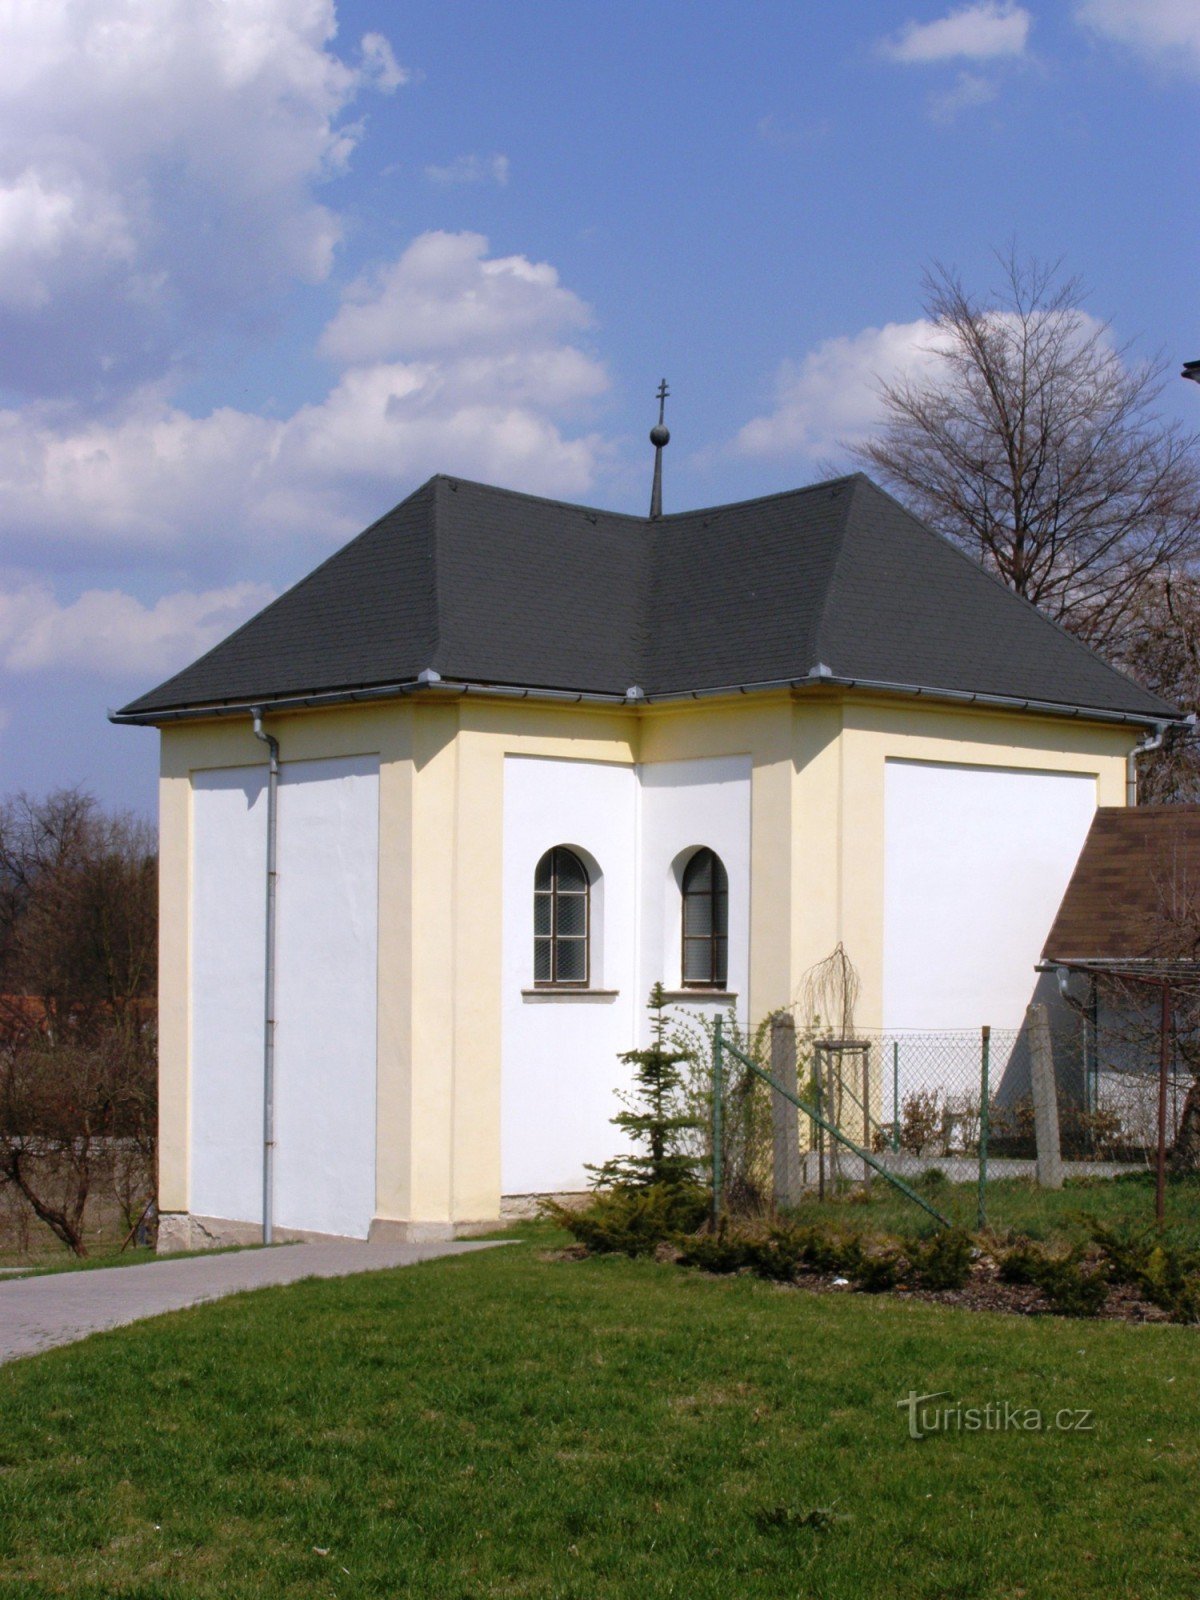 Žamberk - ossuary av Jungfru Maria av sorger